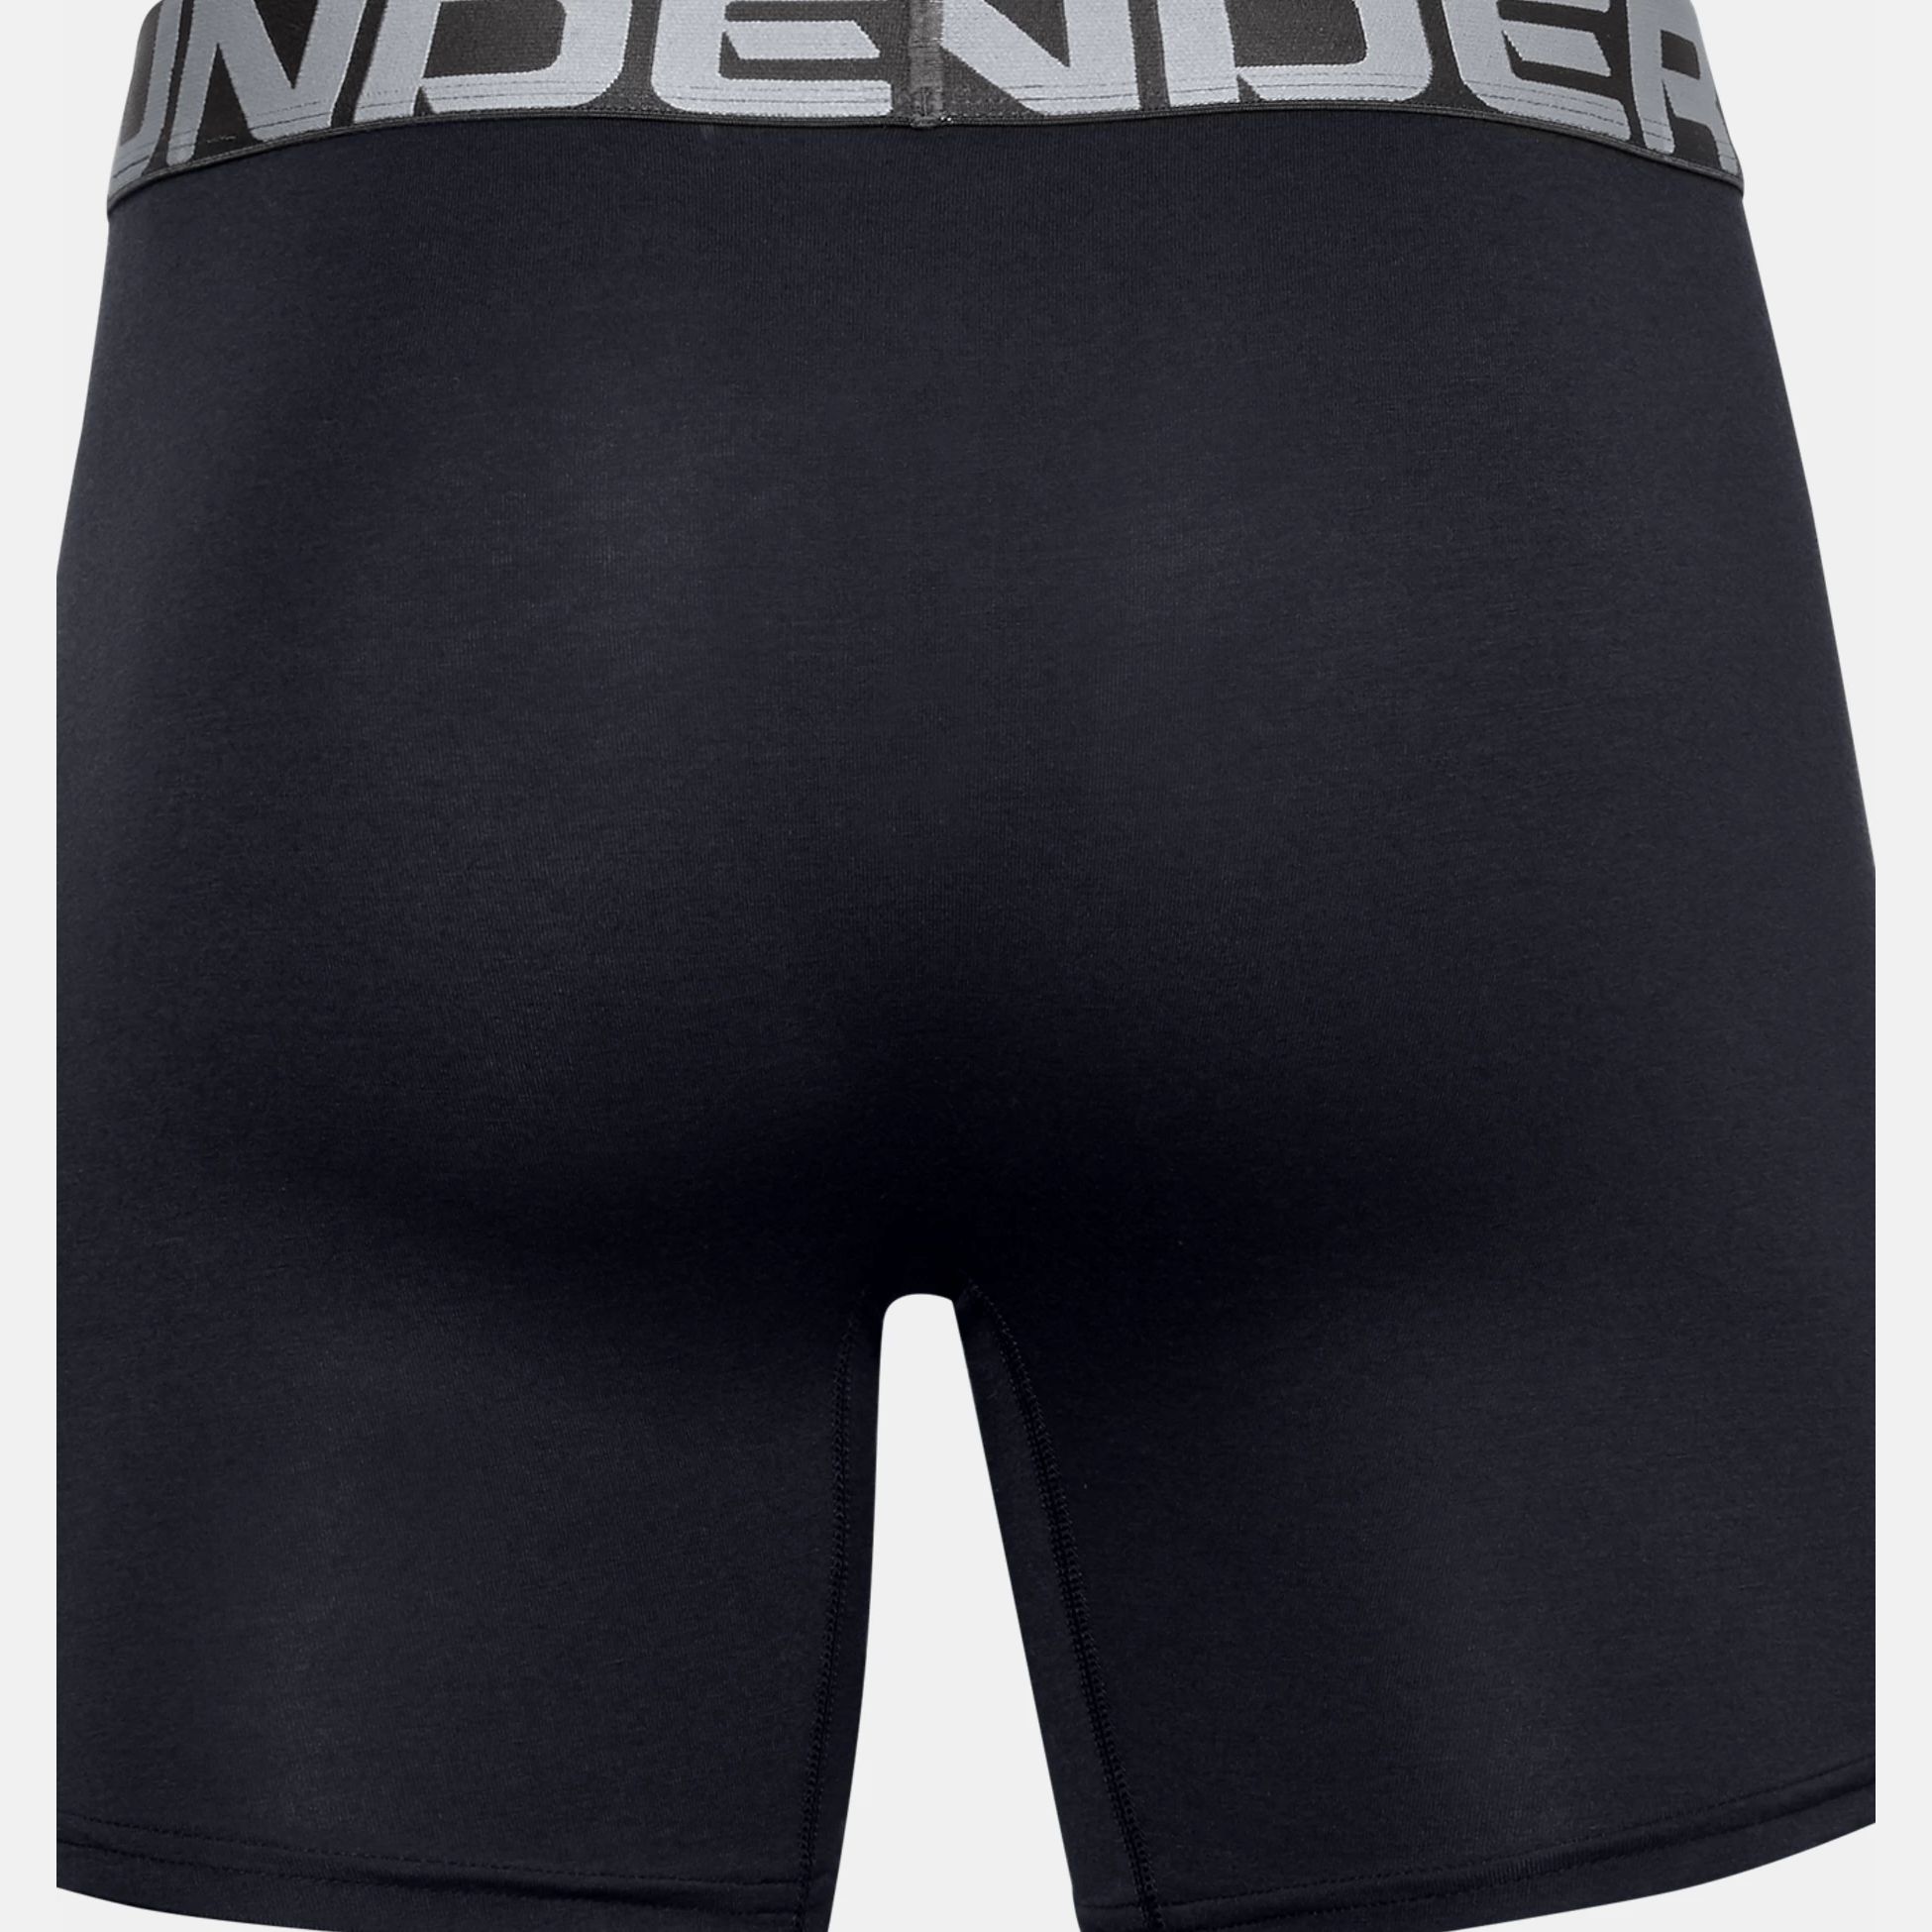 Underwear -  under armour Charged Cotton 6inch Boxerjock 3 Pack 